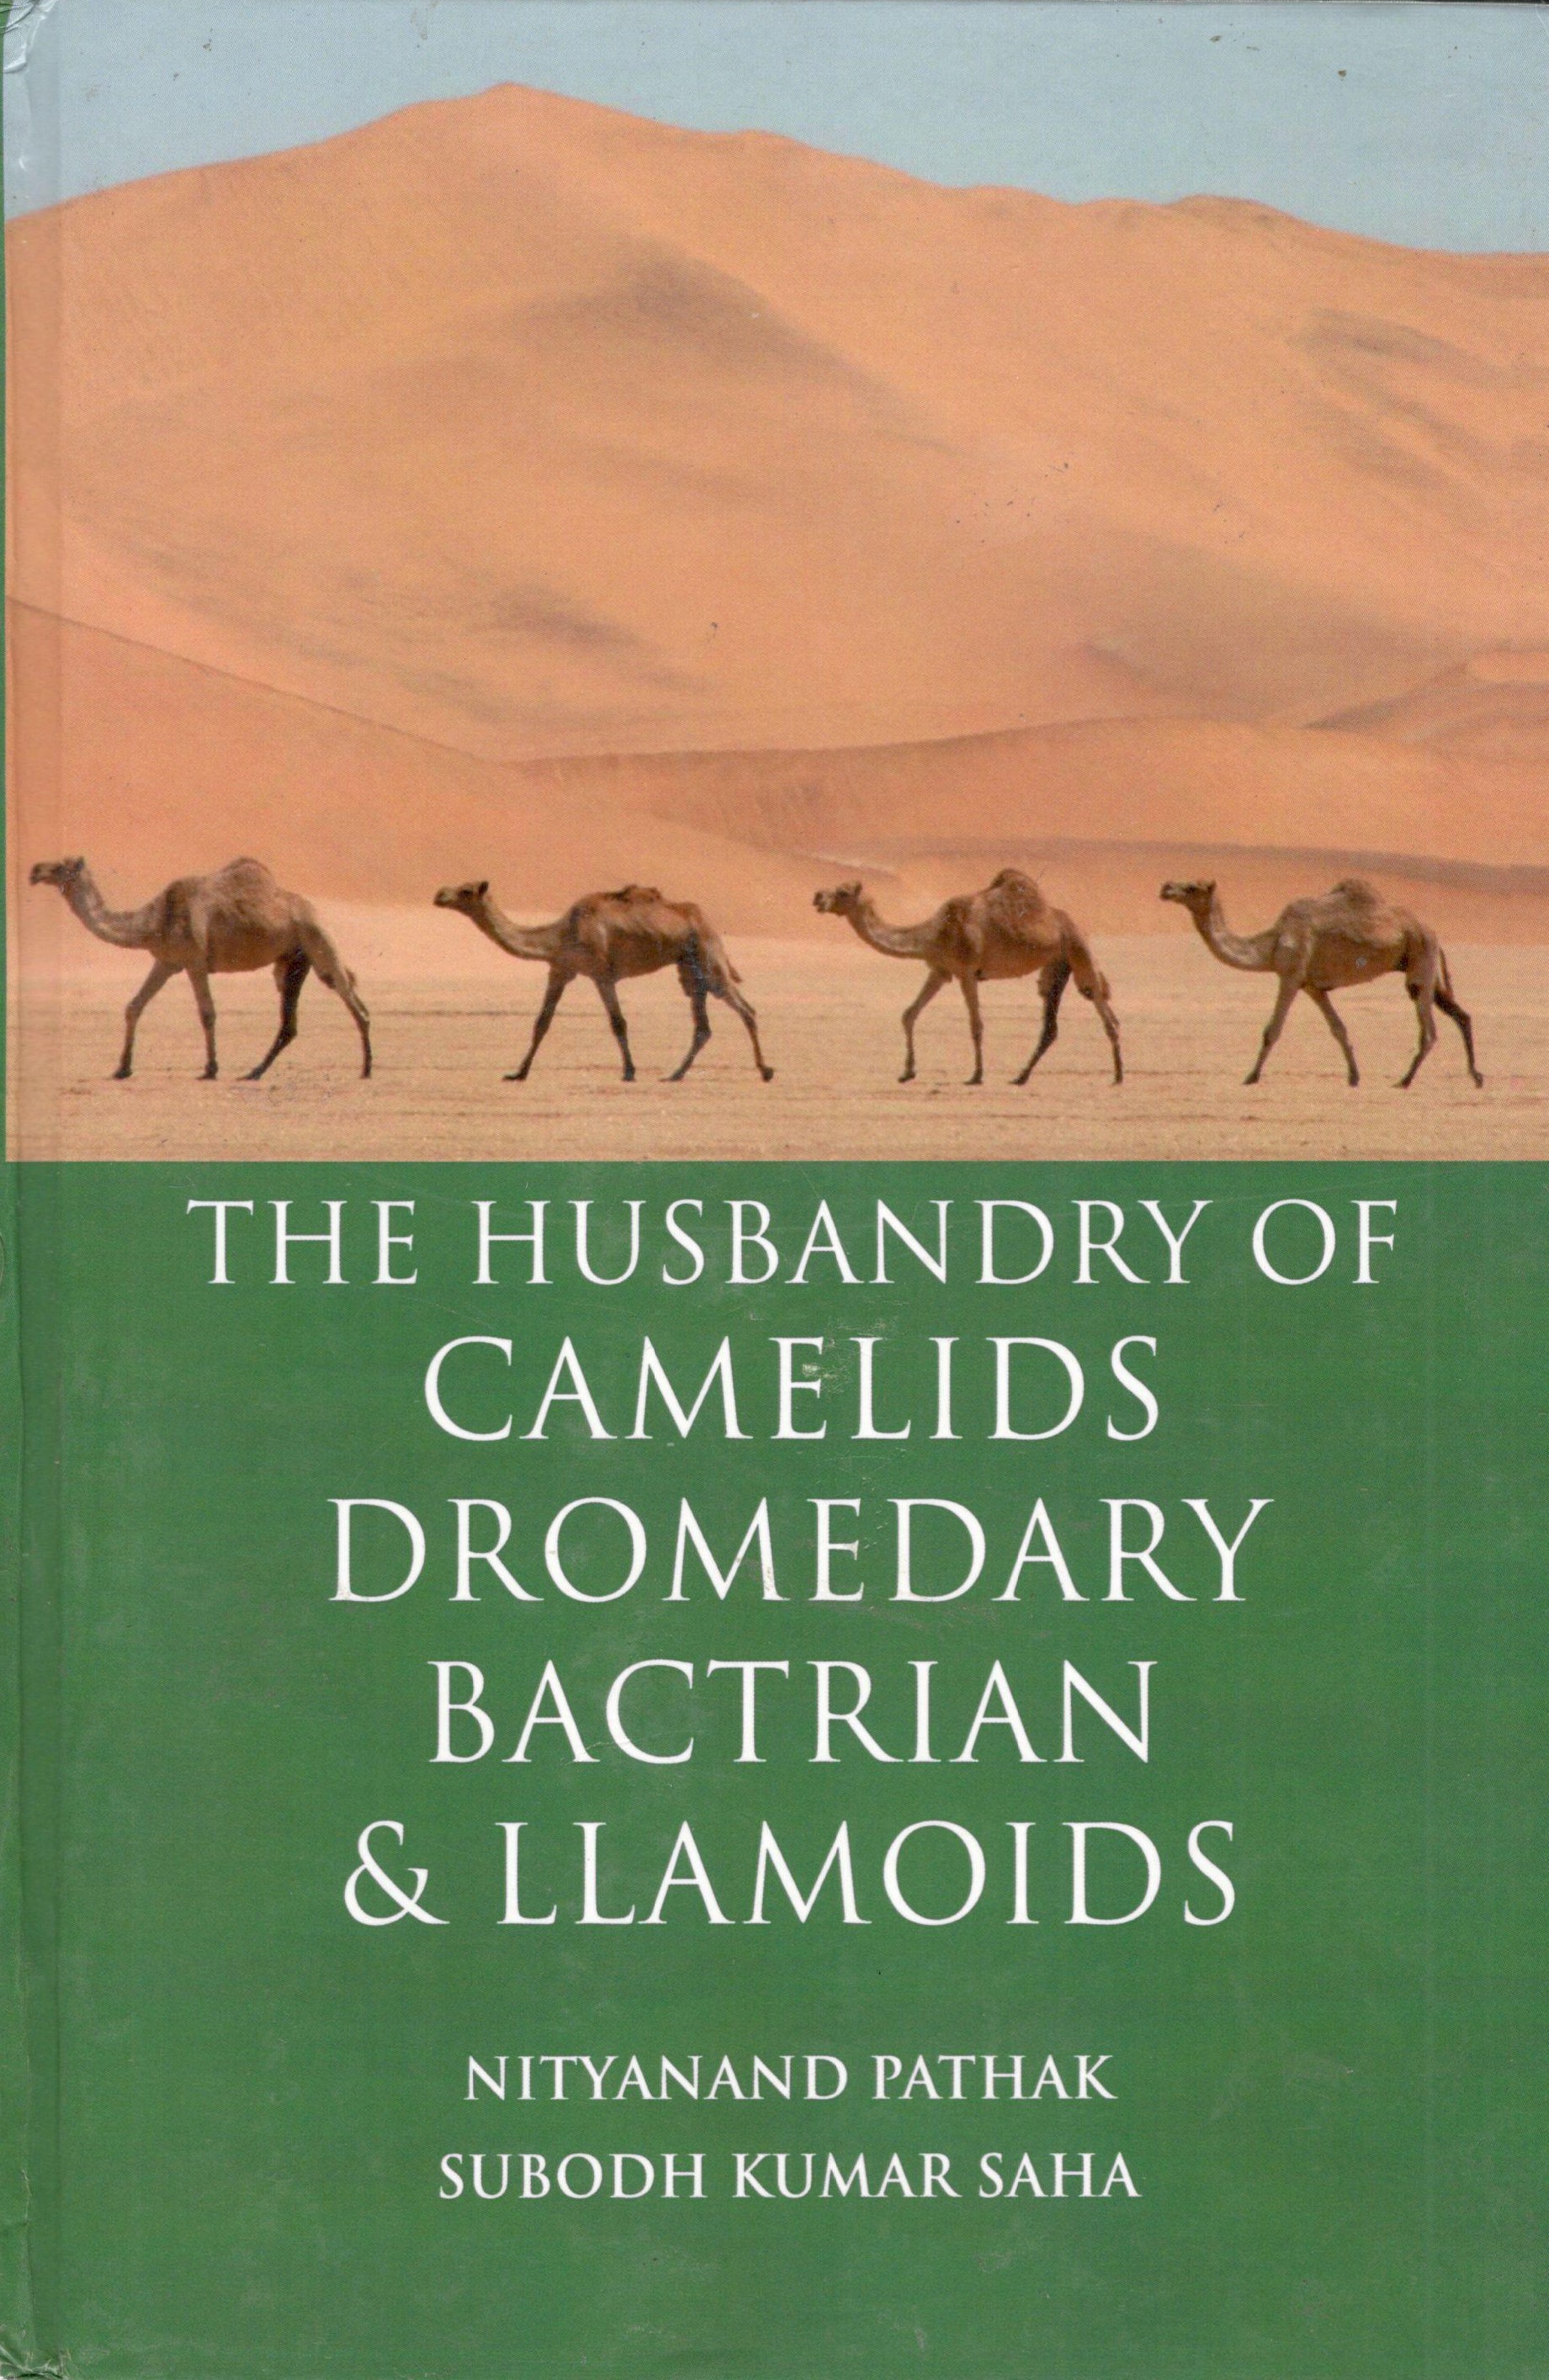 The Husbandry of Camelids Dromedary Bactrian & Llamoids